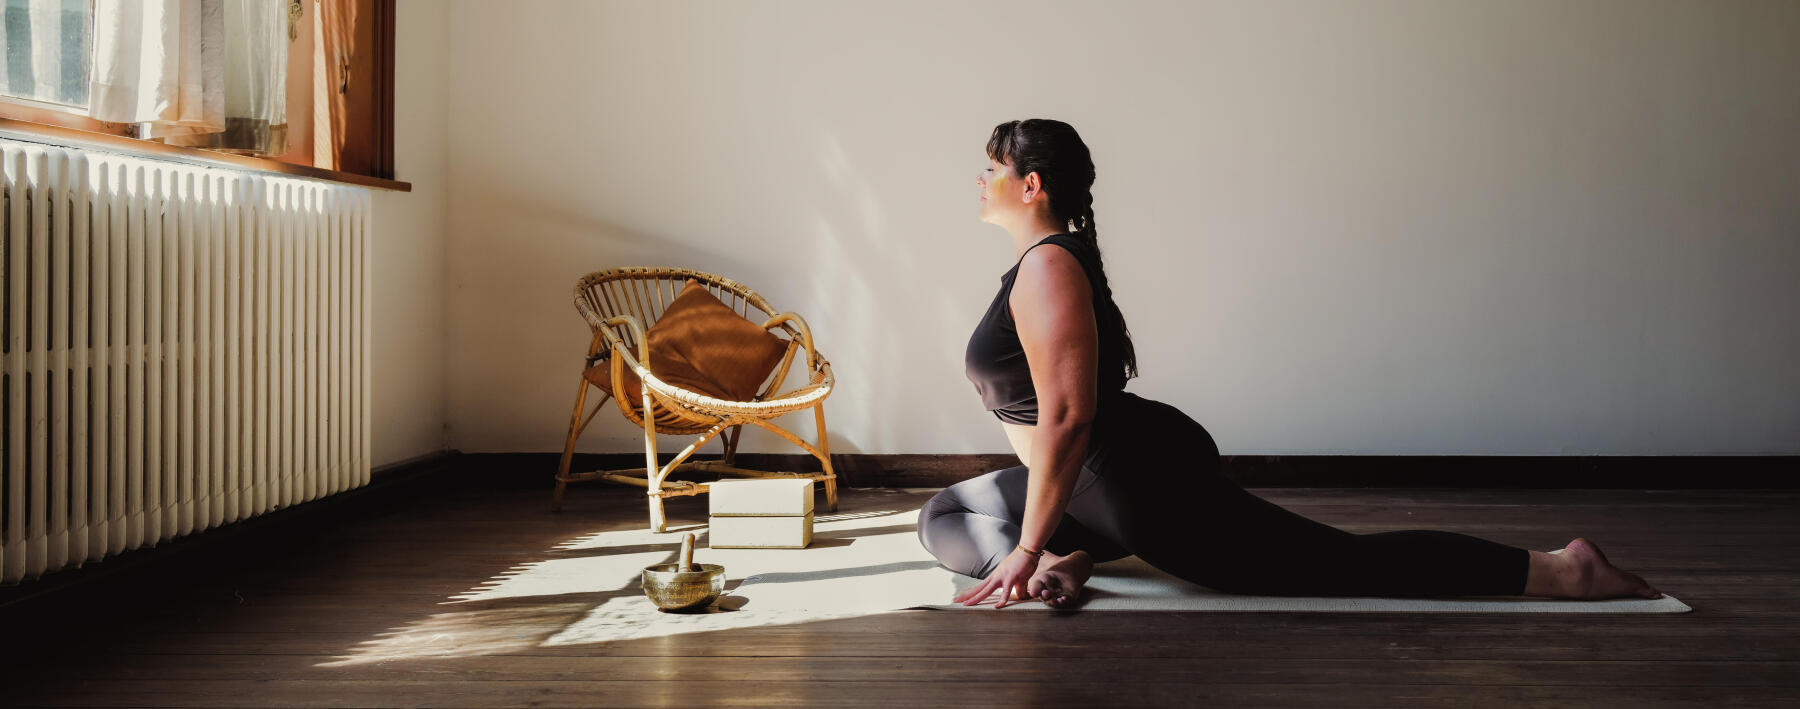 Yoga : réussir la posture du corbeau